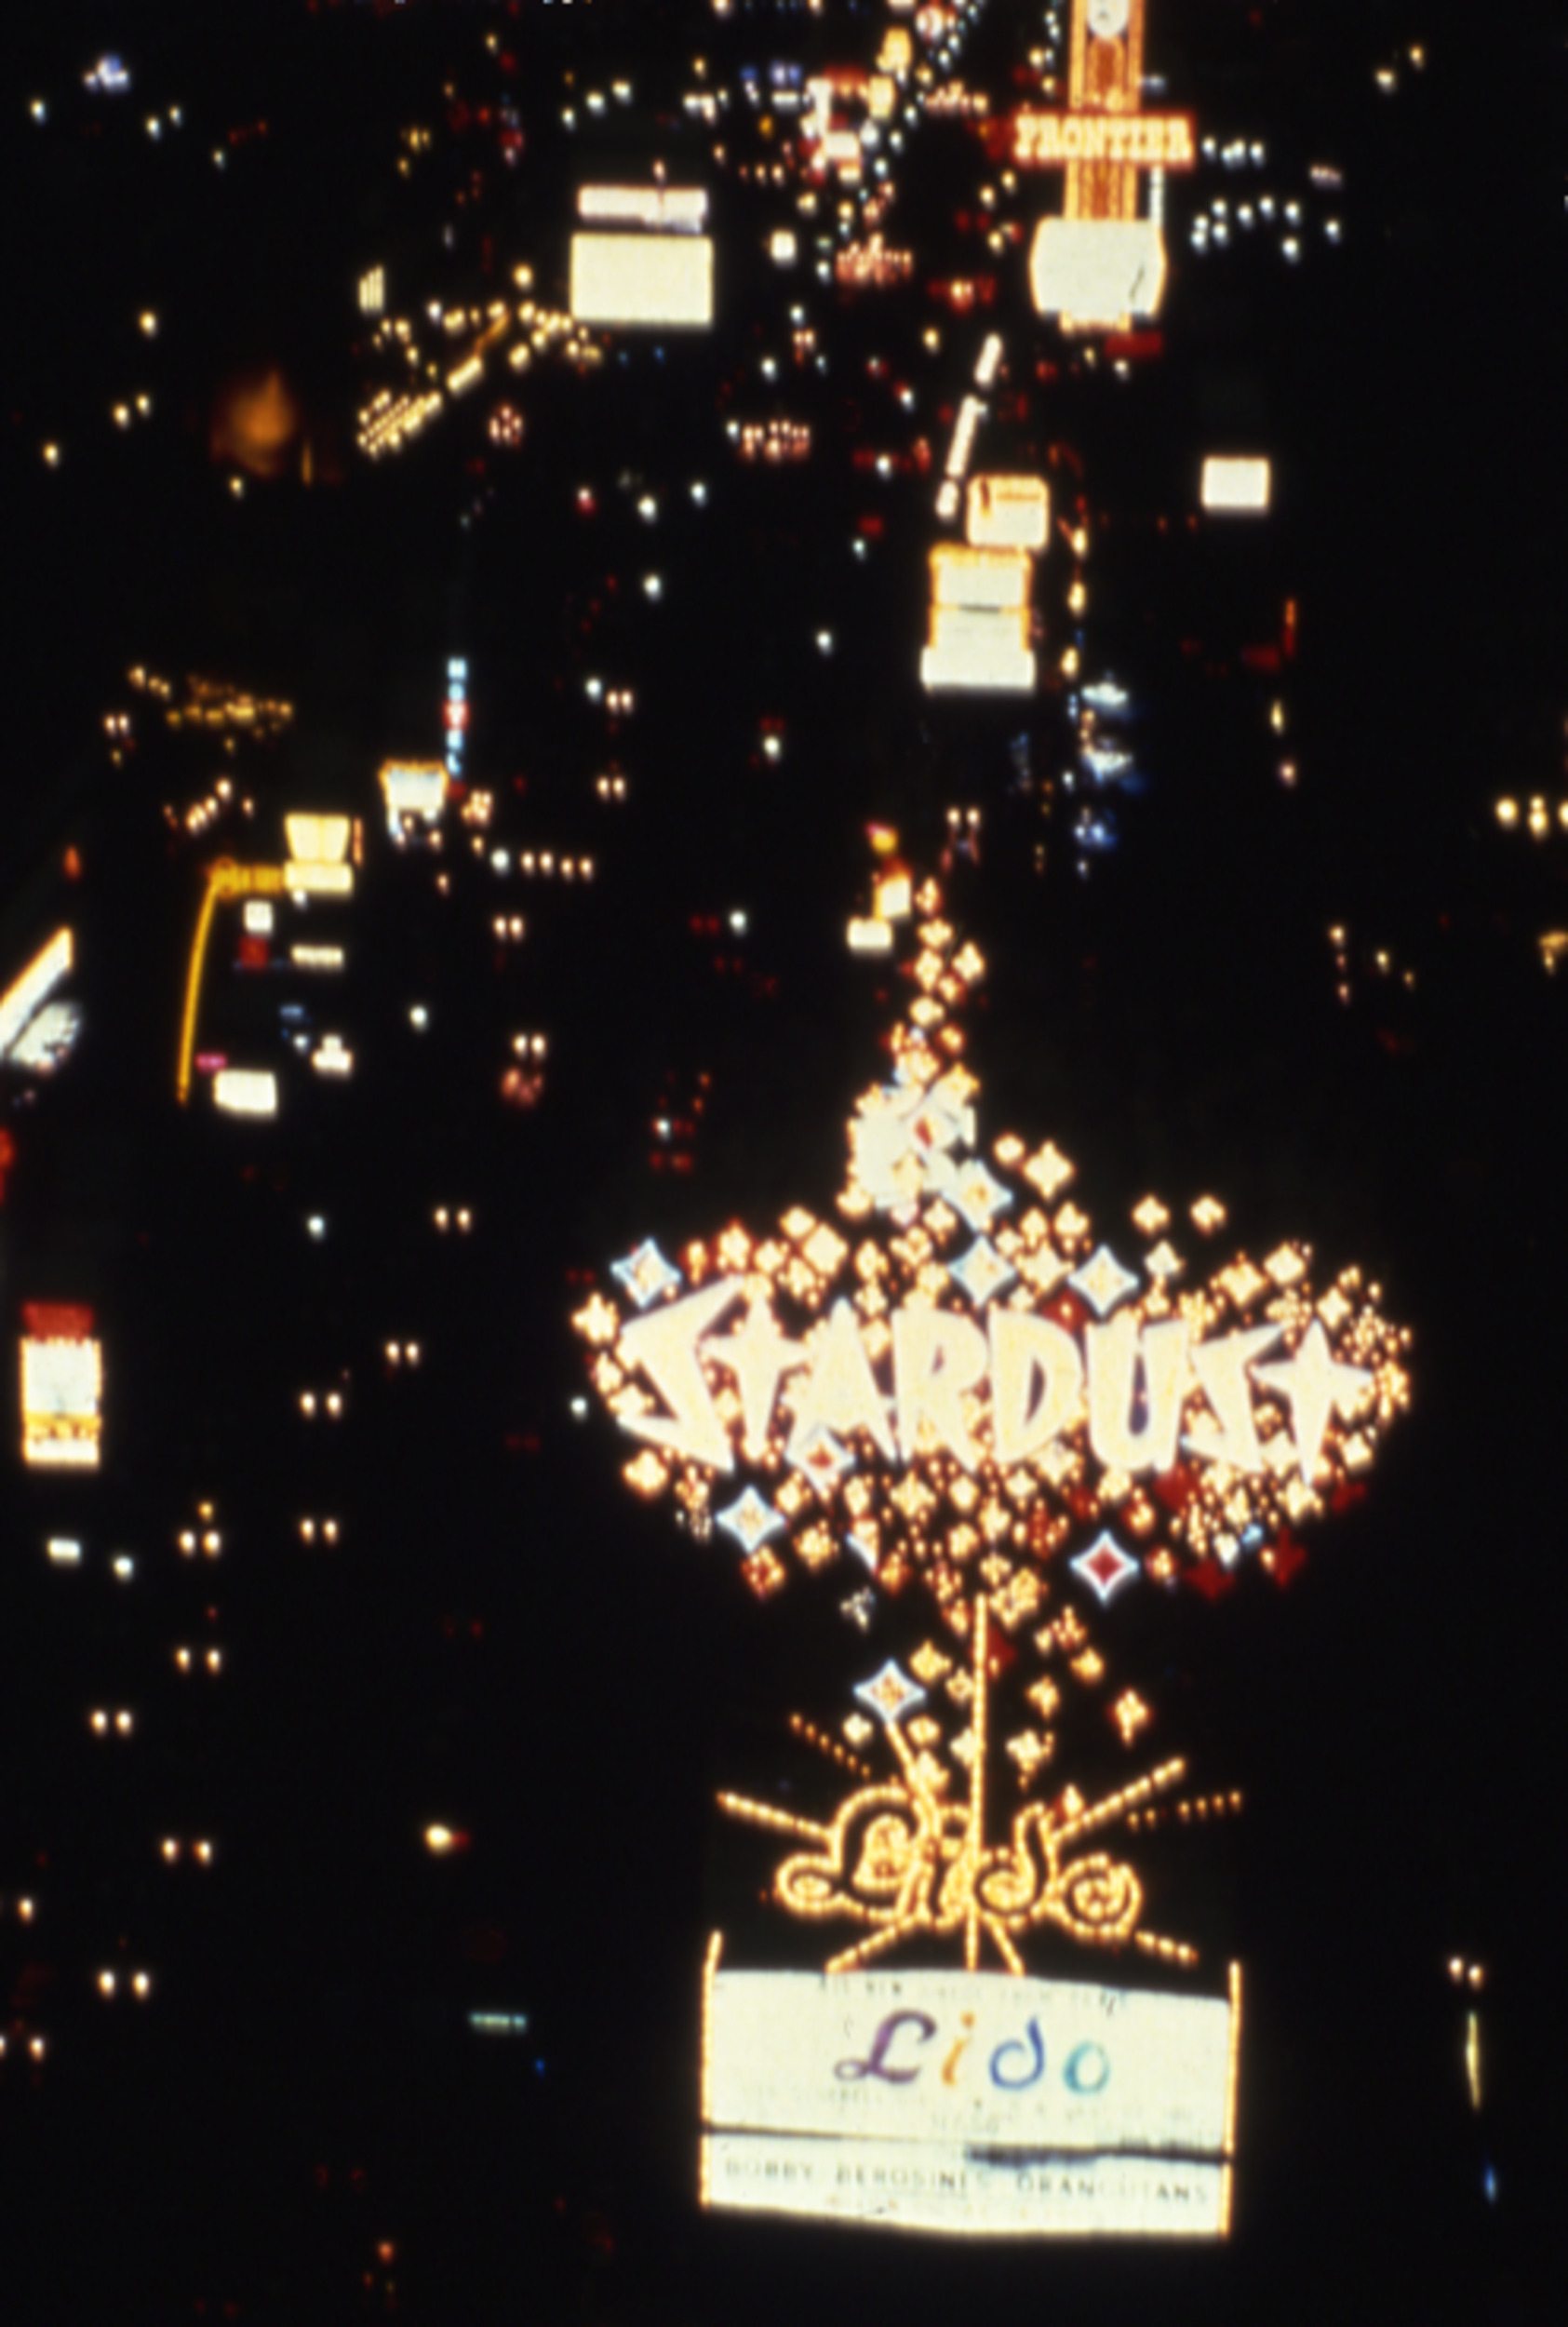 Slide of neon signs at night on Las Vegas Boulevard, circa 1980s